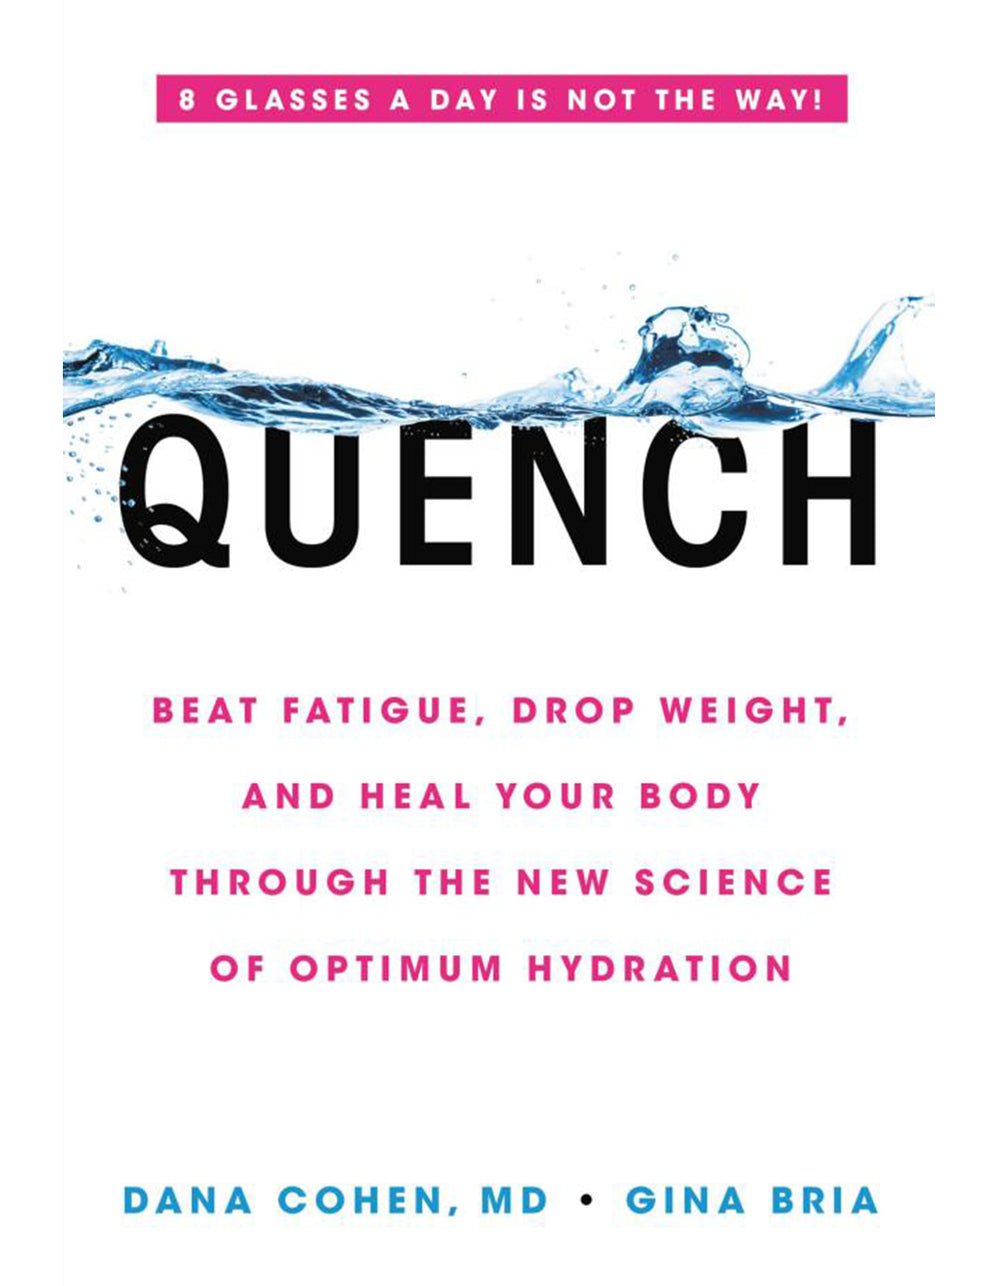 Dr. Dana Cohen Talks Benefits of Hydration